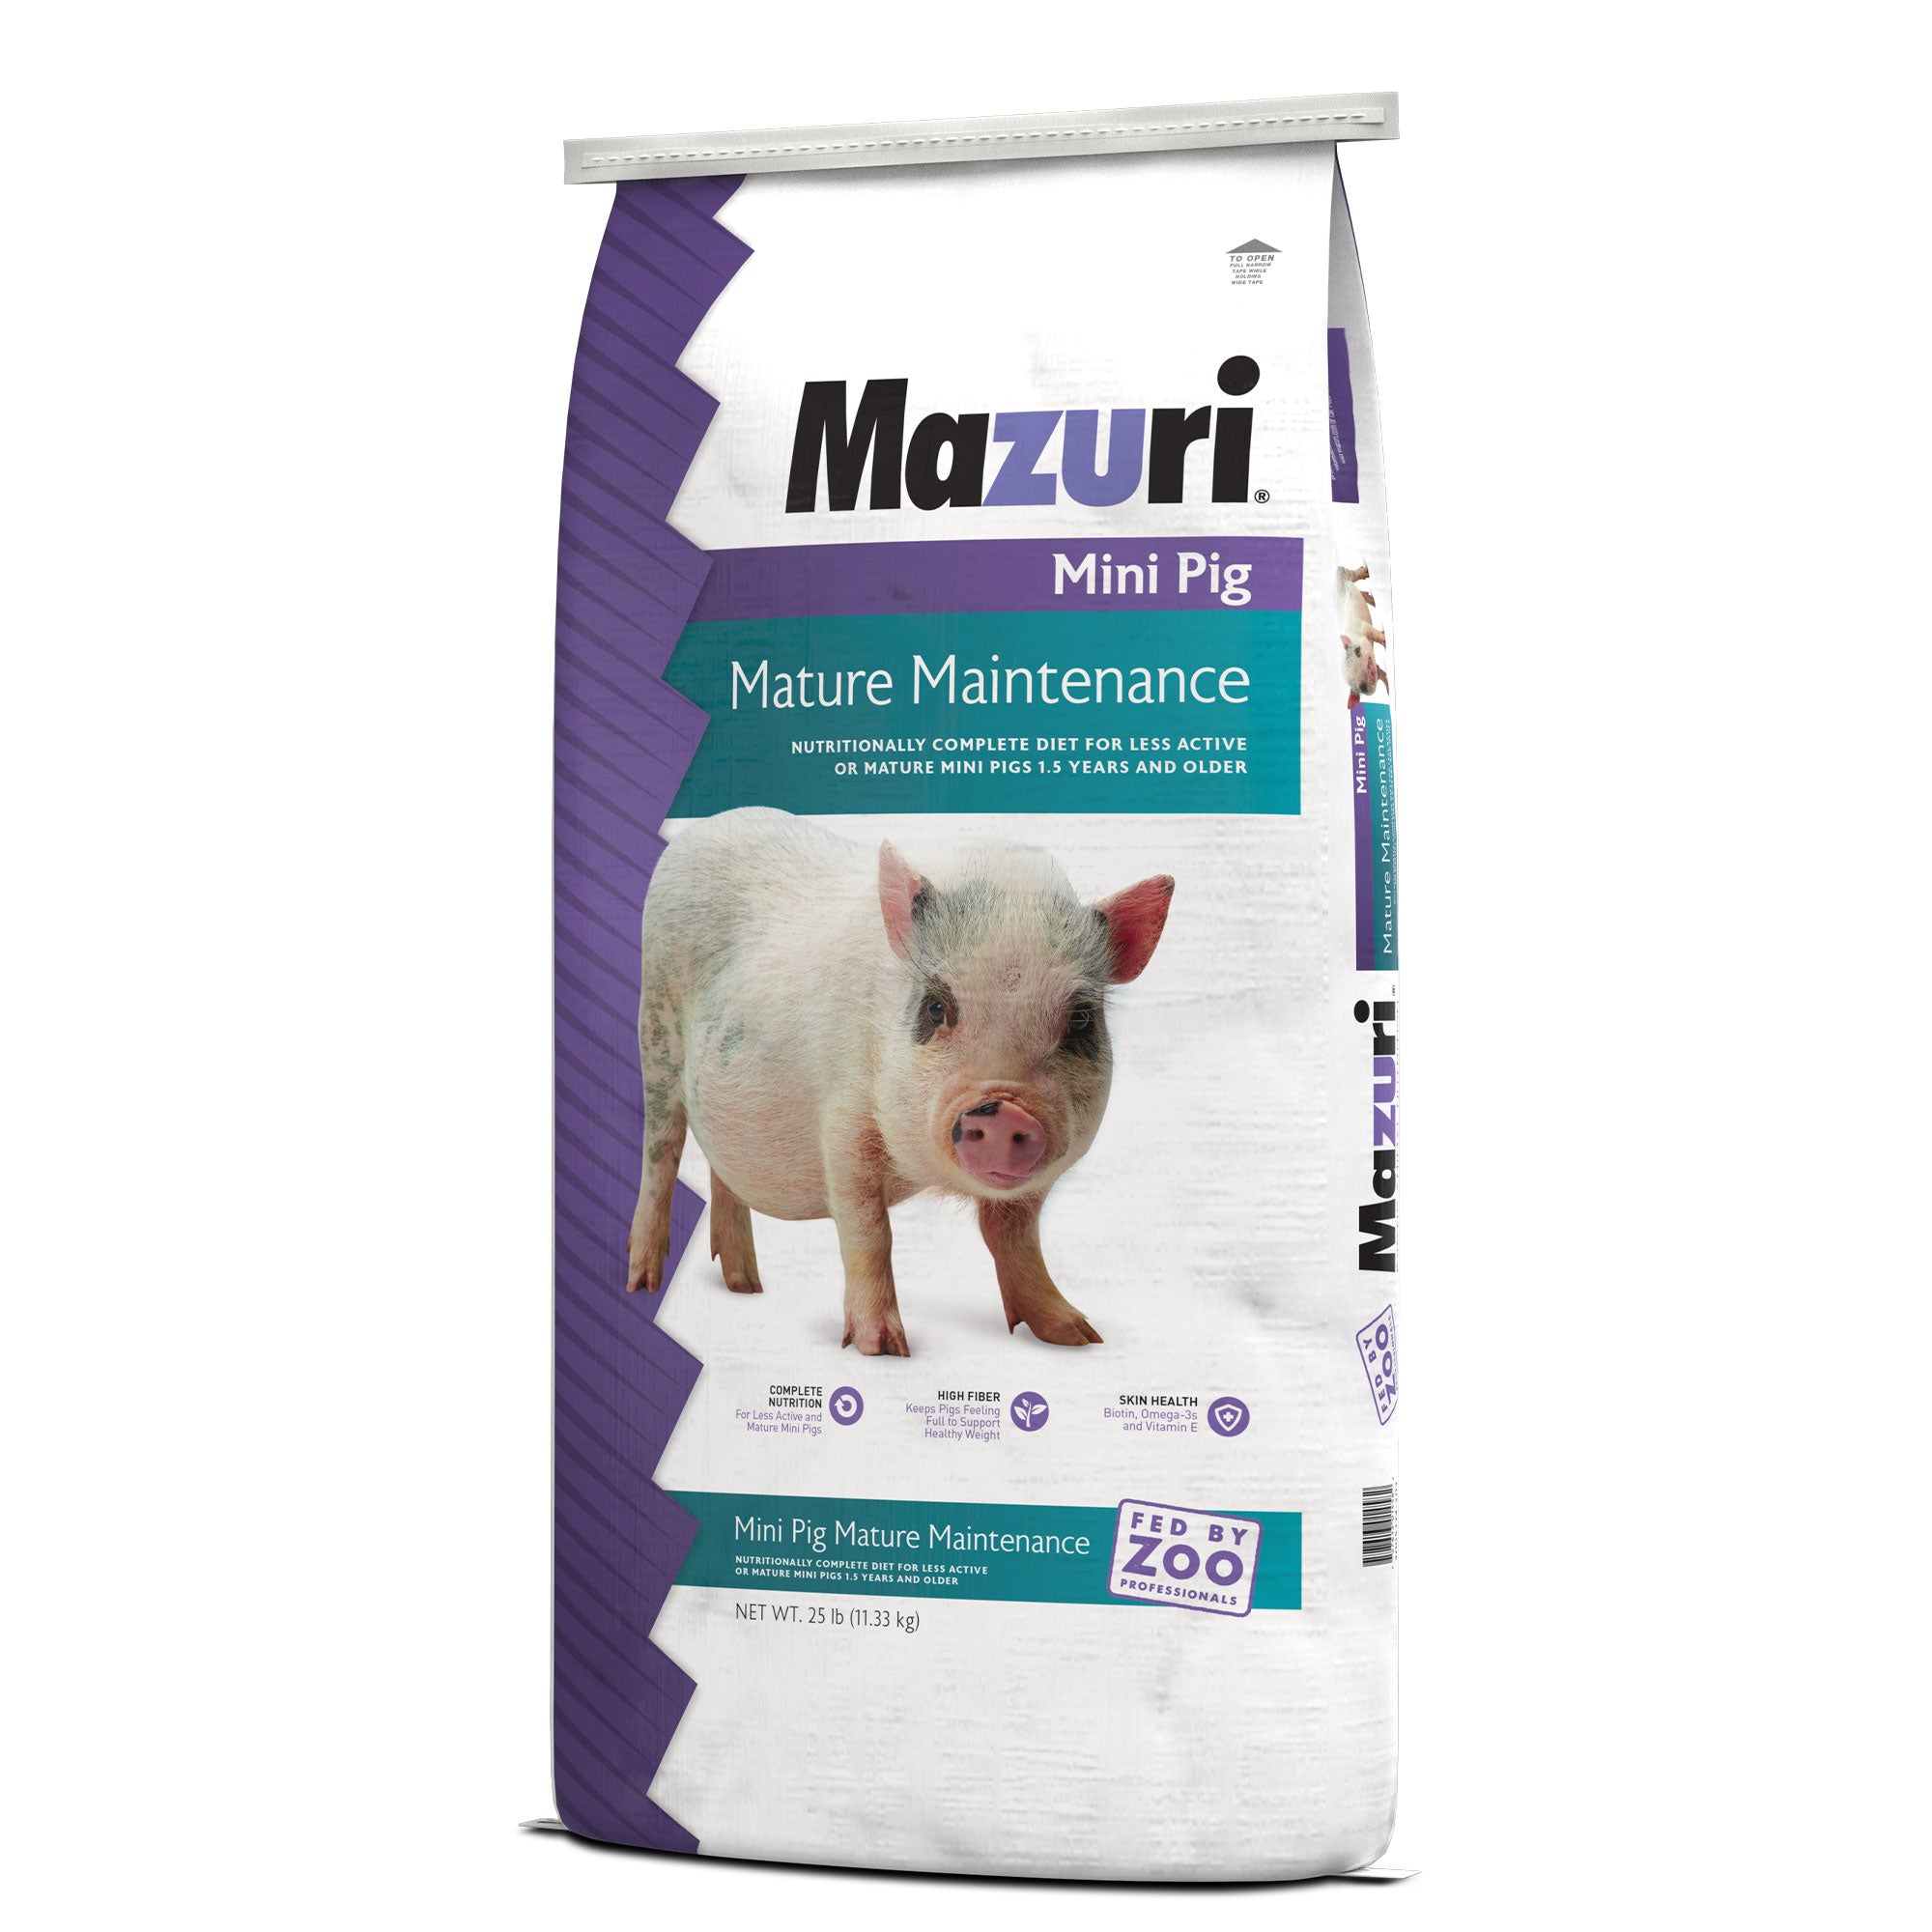 Mini Pig Mature Maintenance bag front and gusset